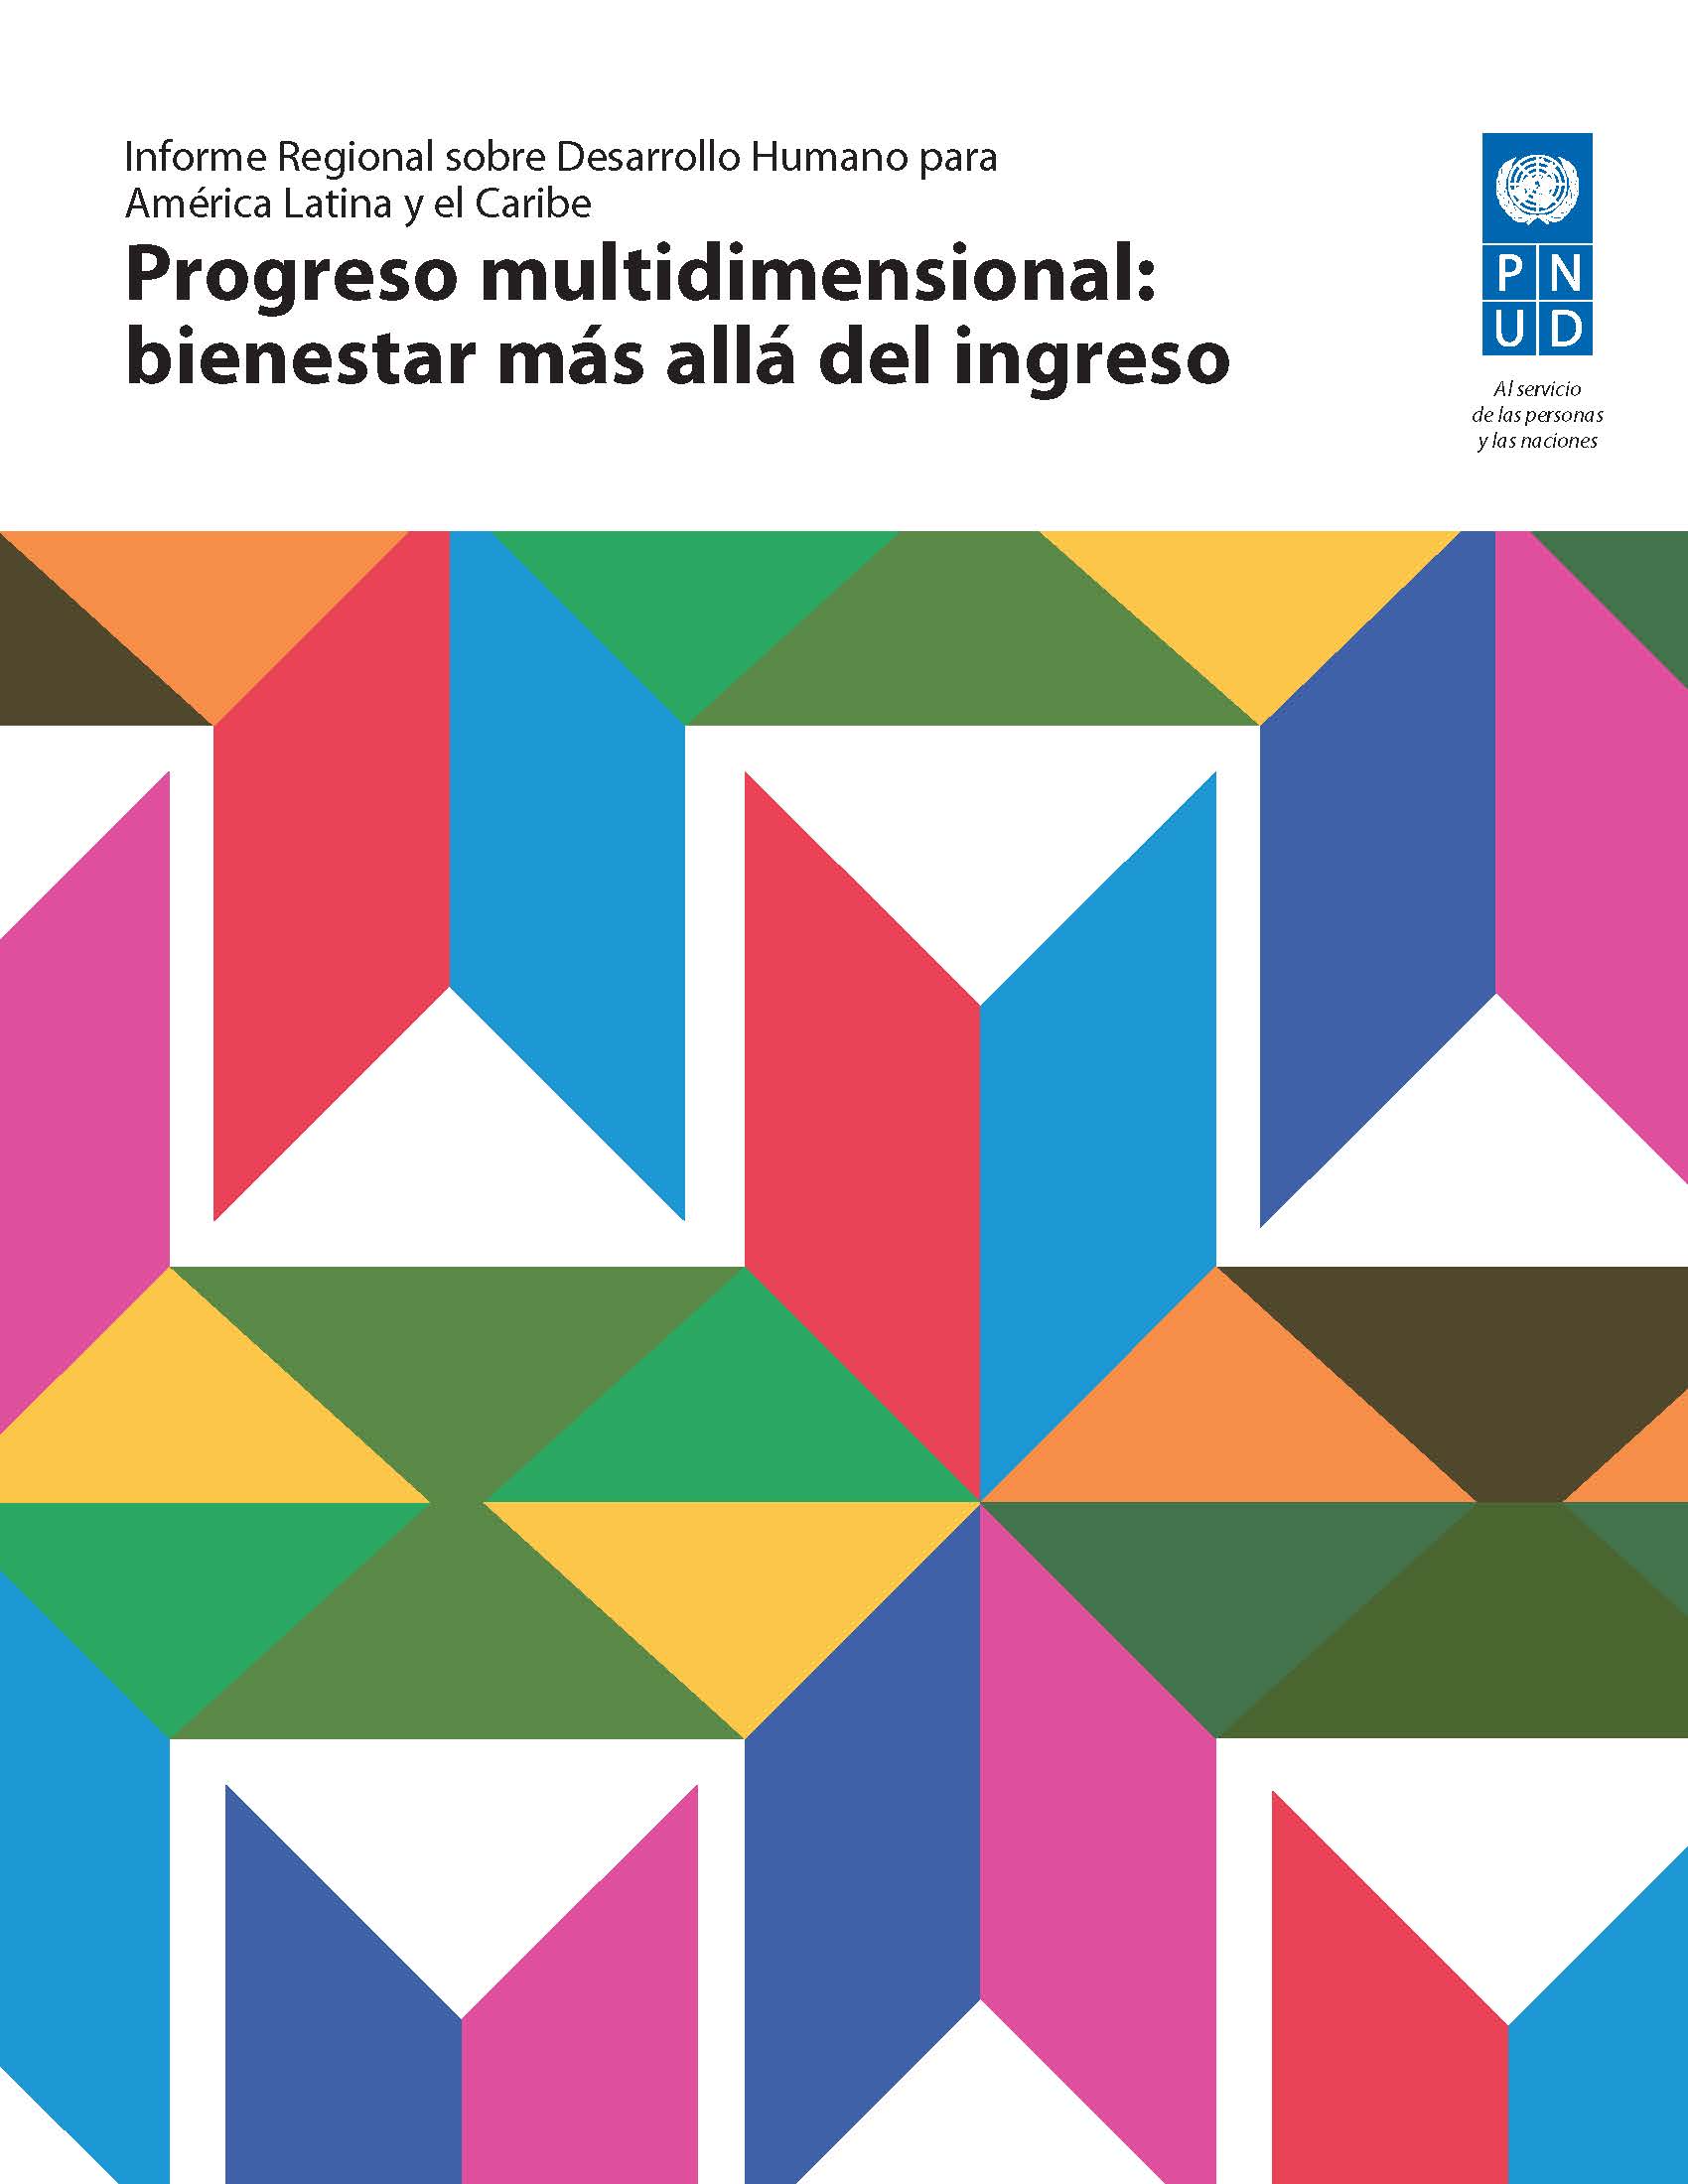 Human Development Report for Latin America and Caribbean